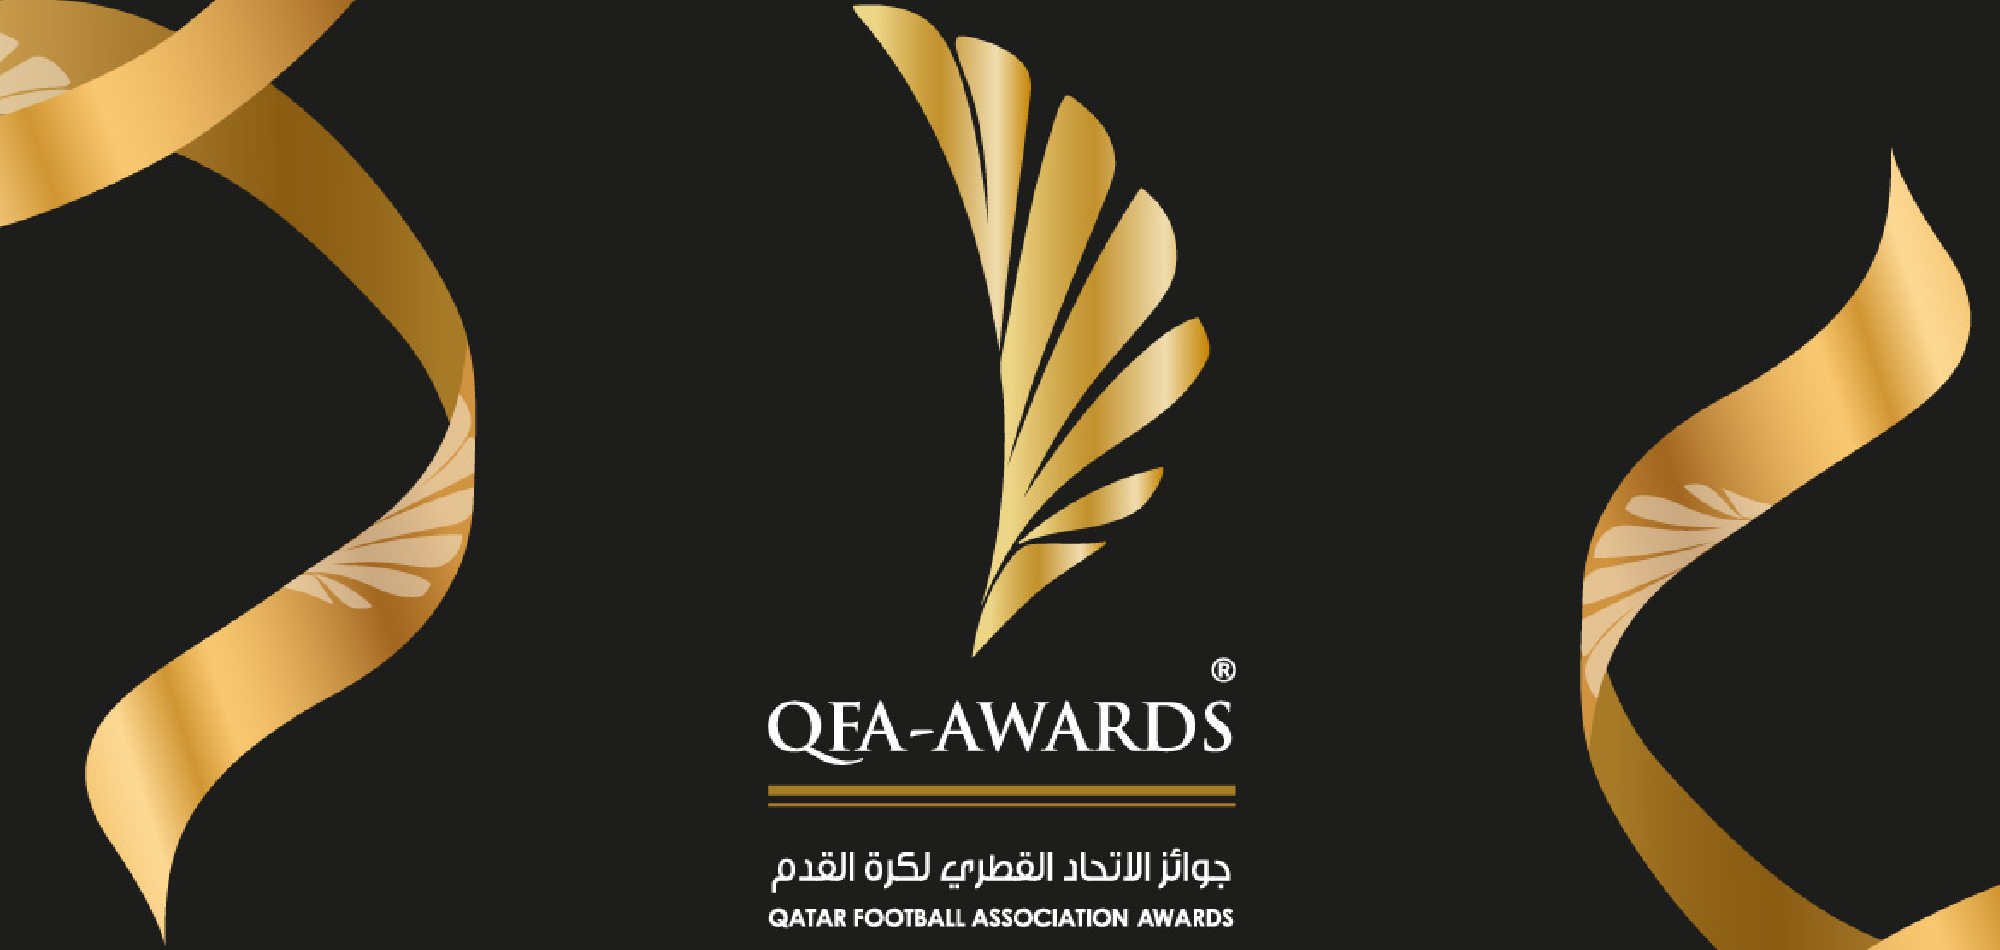 Qatar Football Association Awards for 2022-2023 season